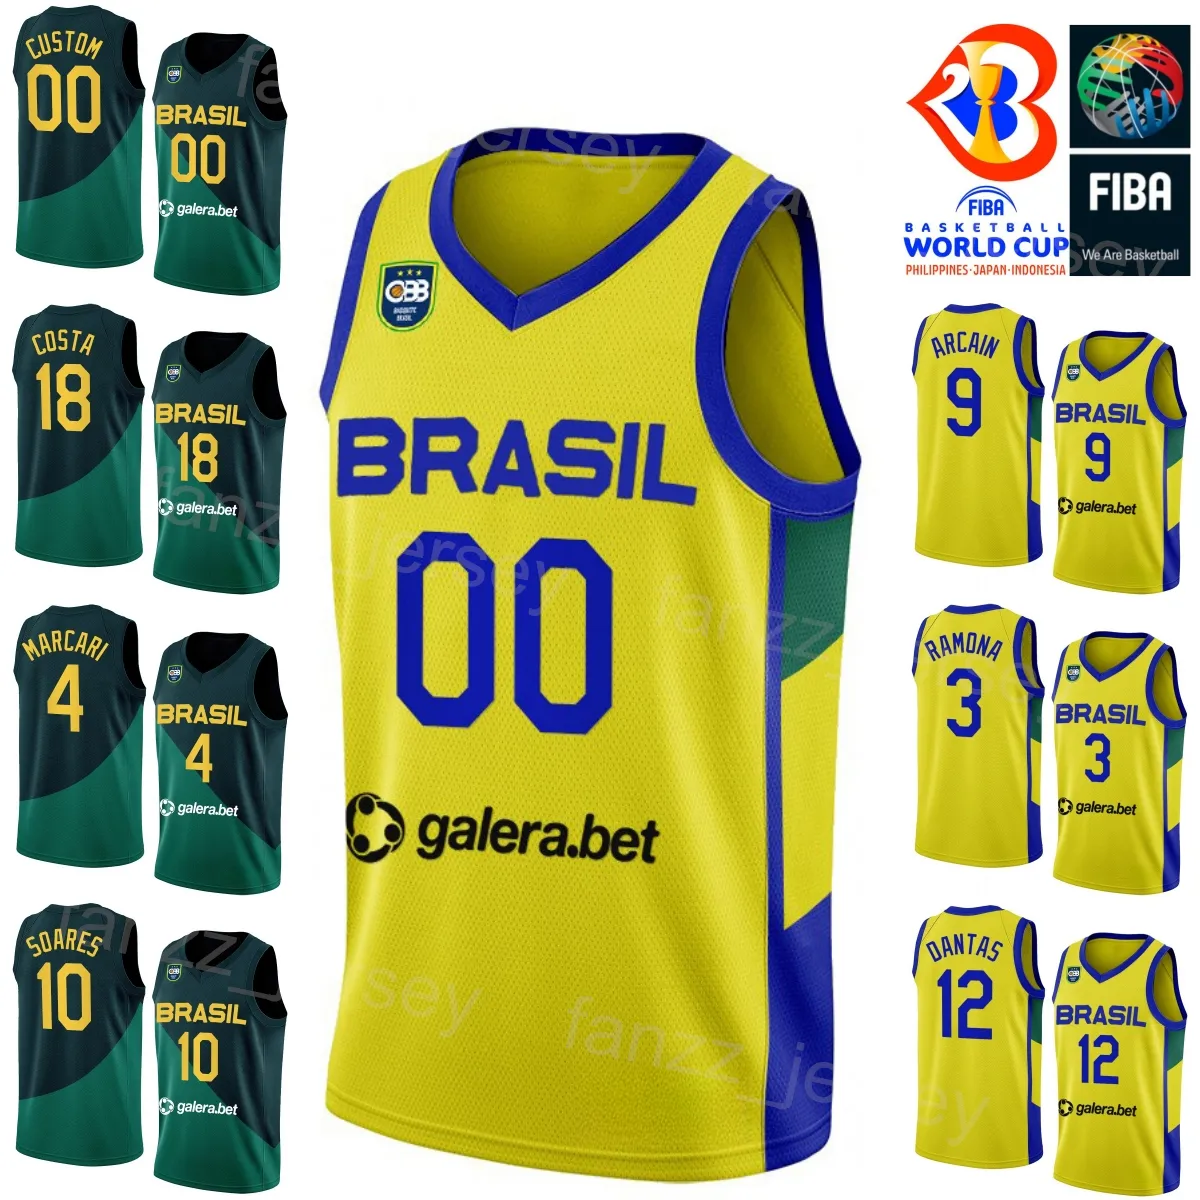 Printed World Cup Brasil Basketball Jersey Brazils 11 GUI SANTOS 9 Marcelinho HUERTAS 8 Vitor BENITE 6 CRISTIANO FELICIO 19 Leandro Barbosa 11 Anderson Varejao